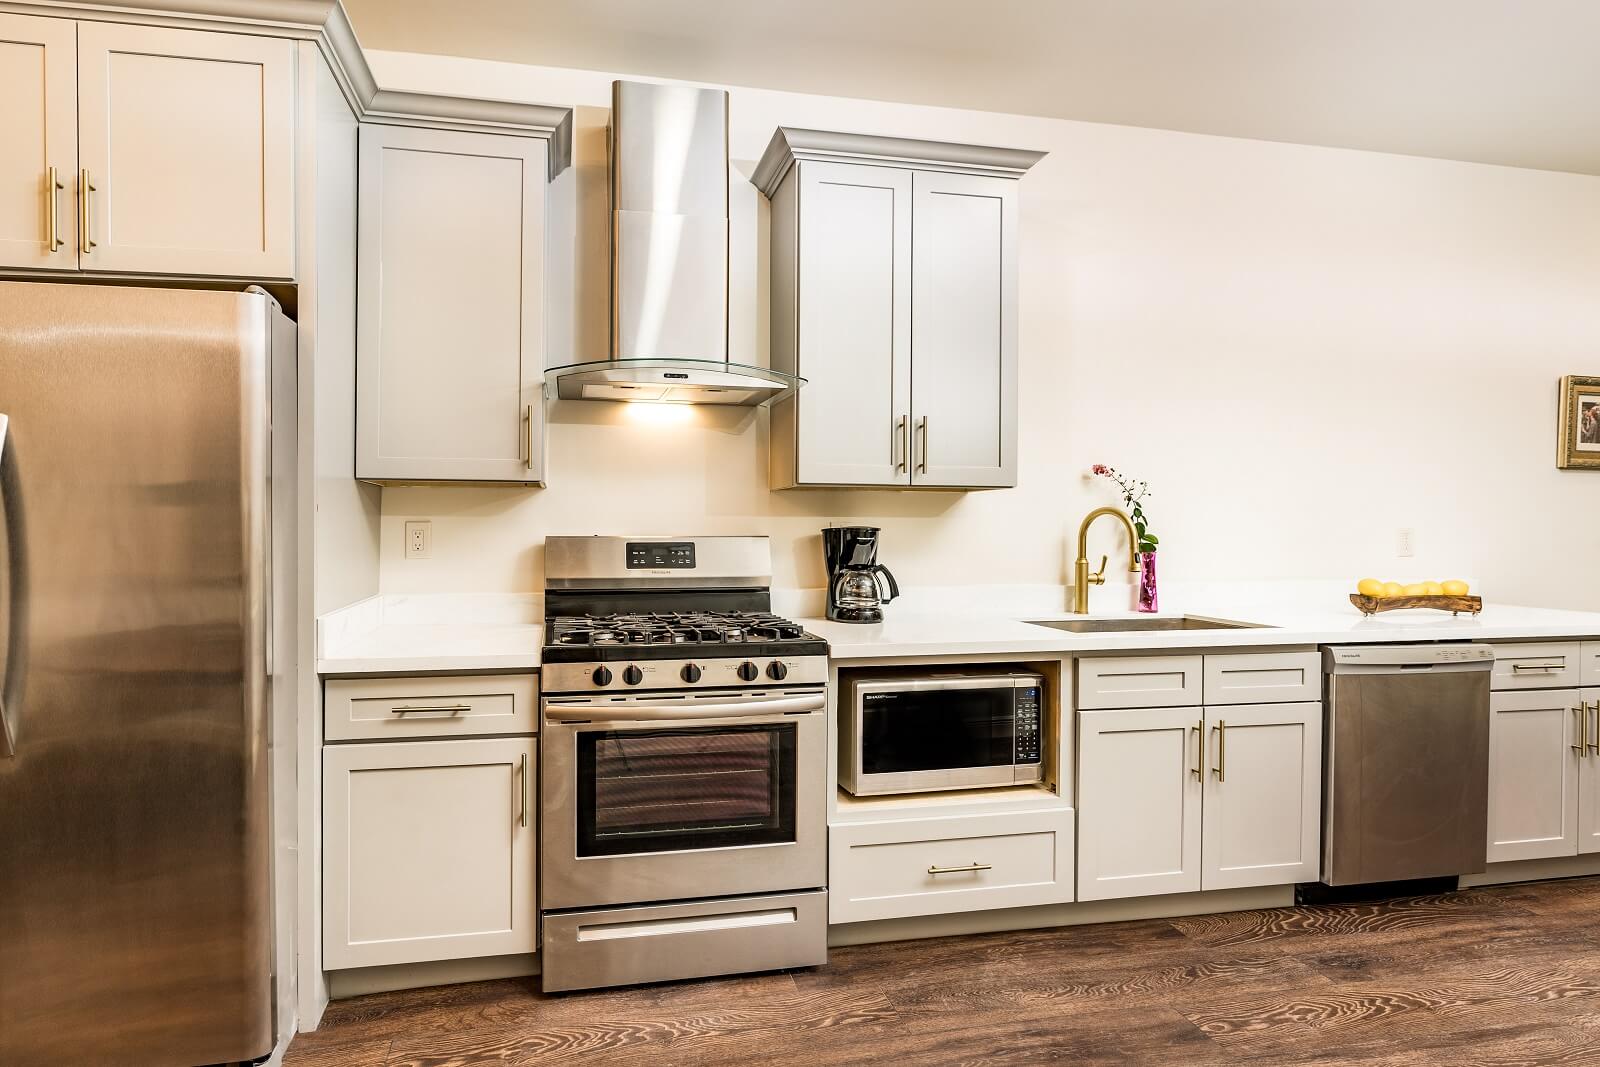 The Alexandre Unit 405 kitchen, a New Orleans luxury rental.